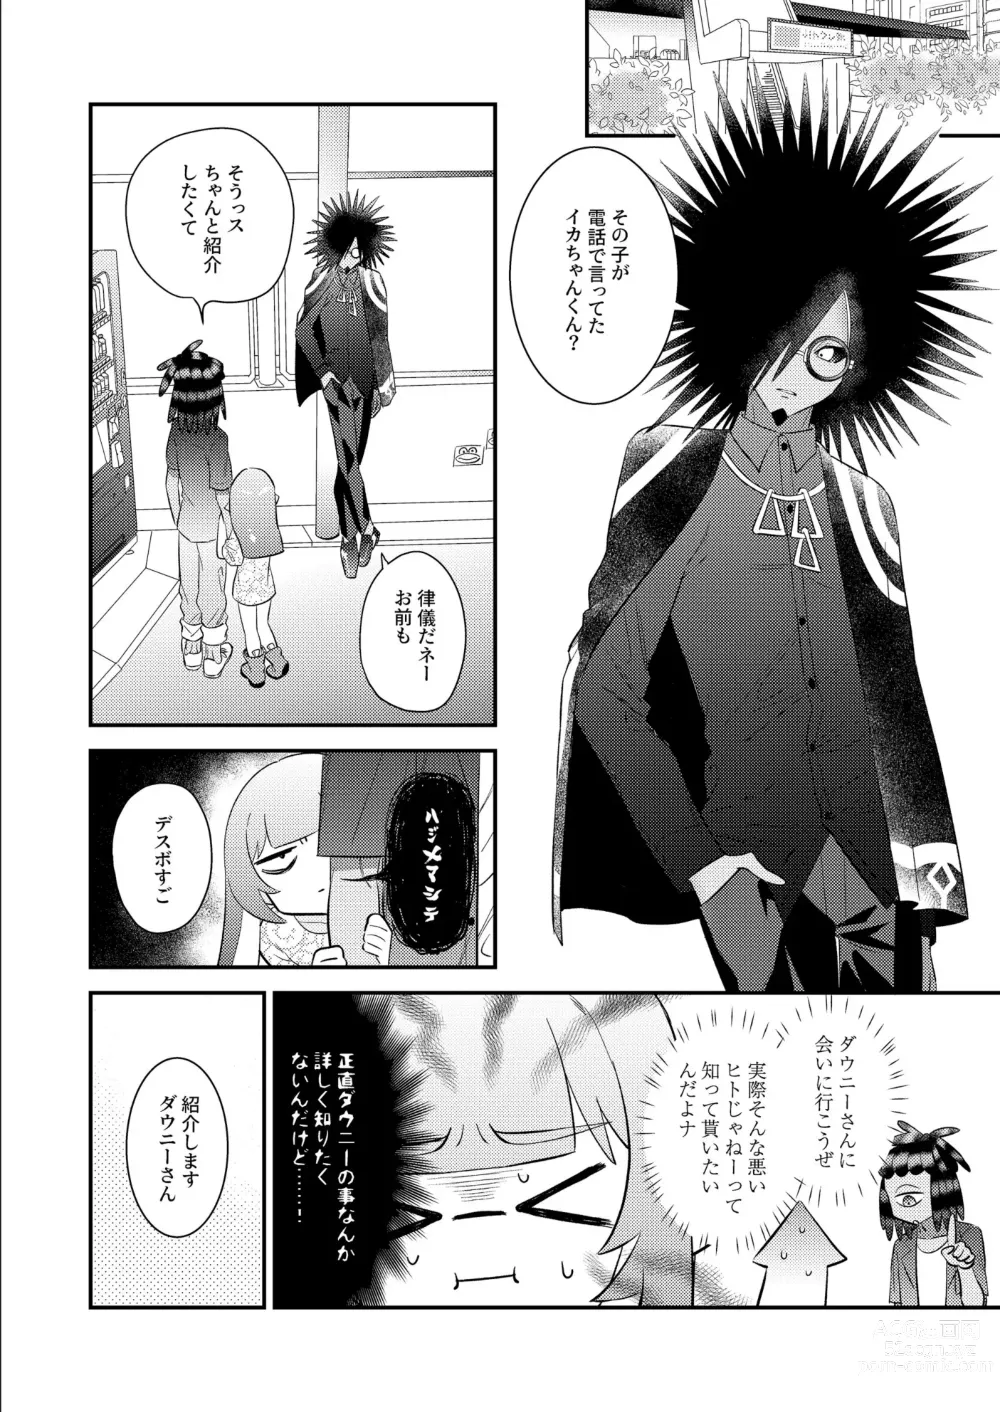 Page 37 of doujinshi Uketomete Hoshii no My Darling! - I want you to accept me my darling!